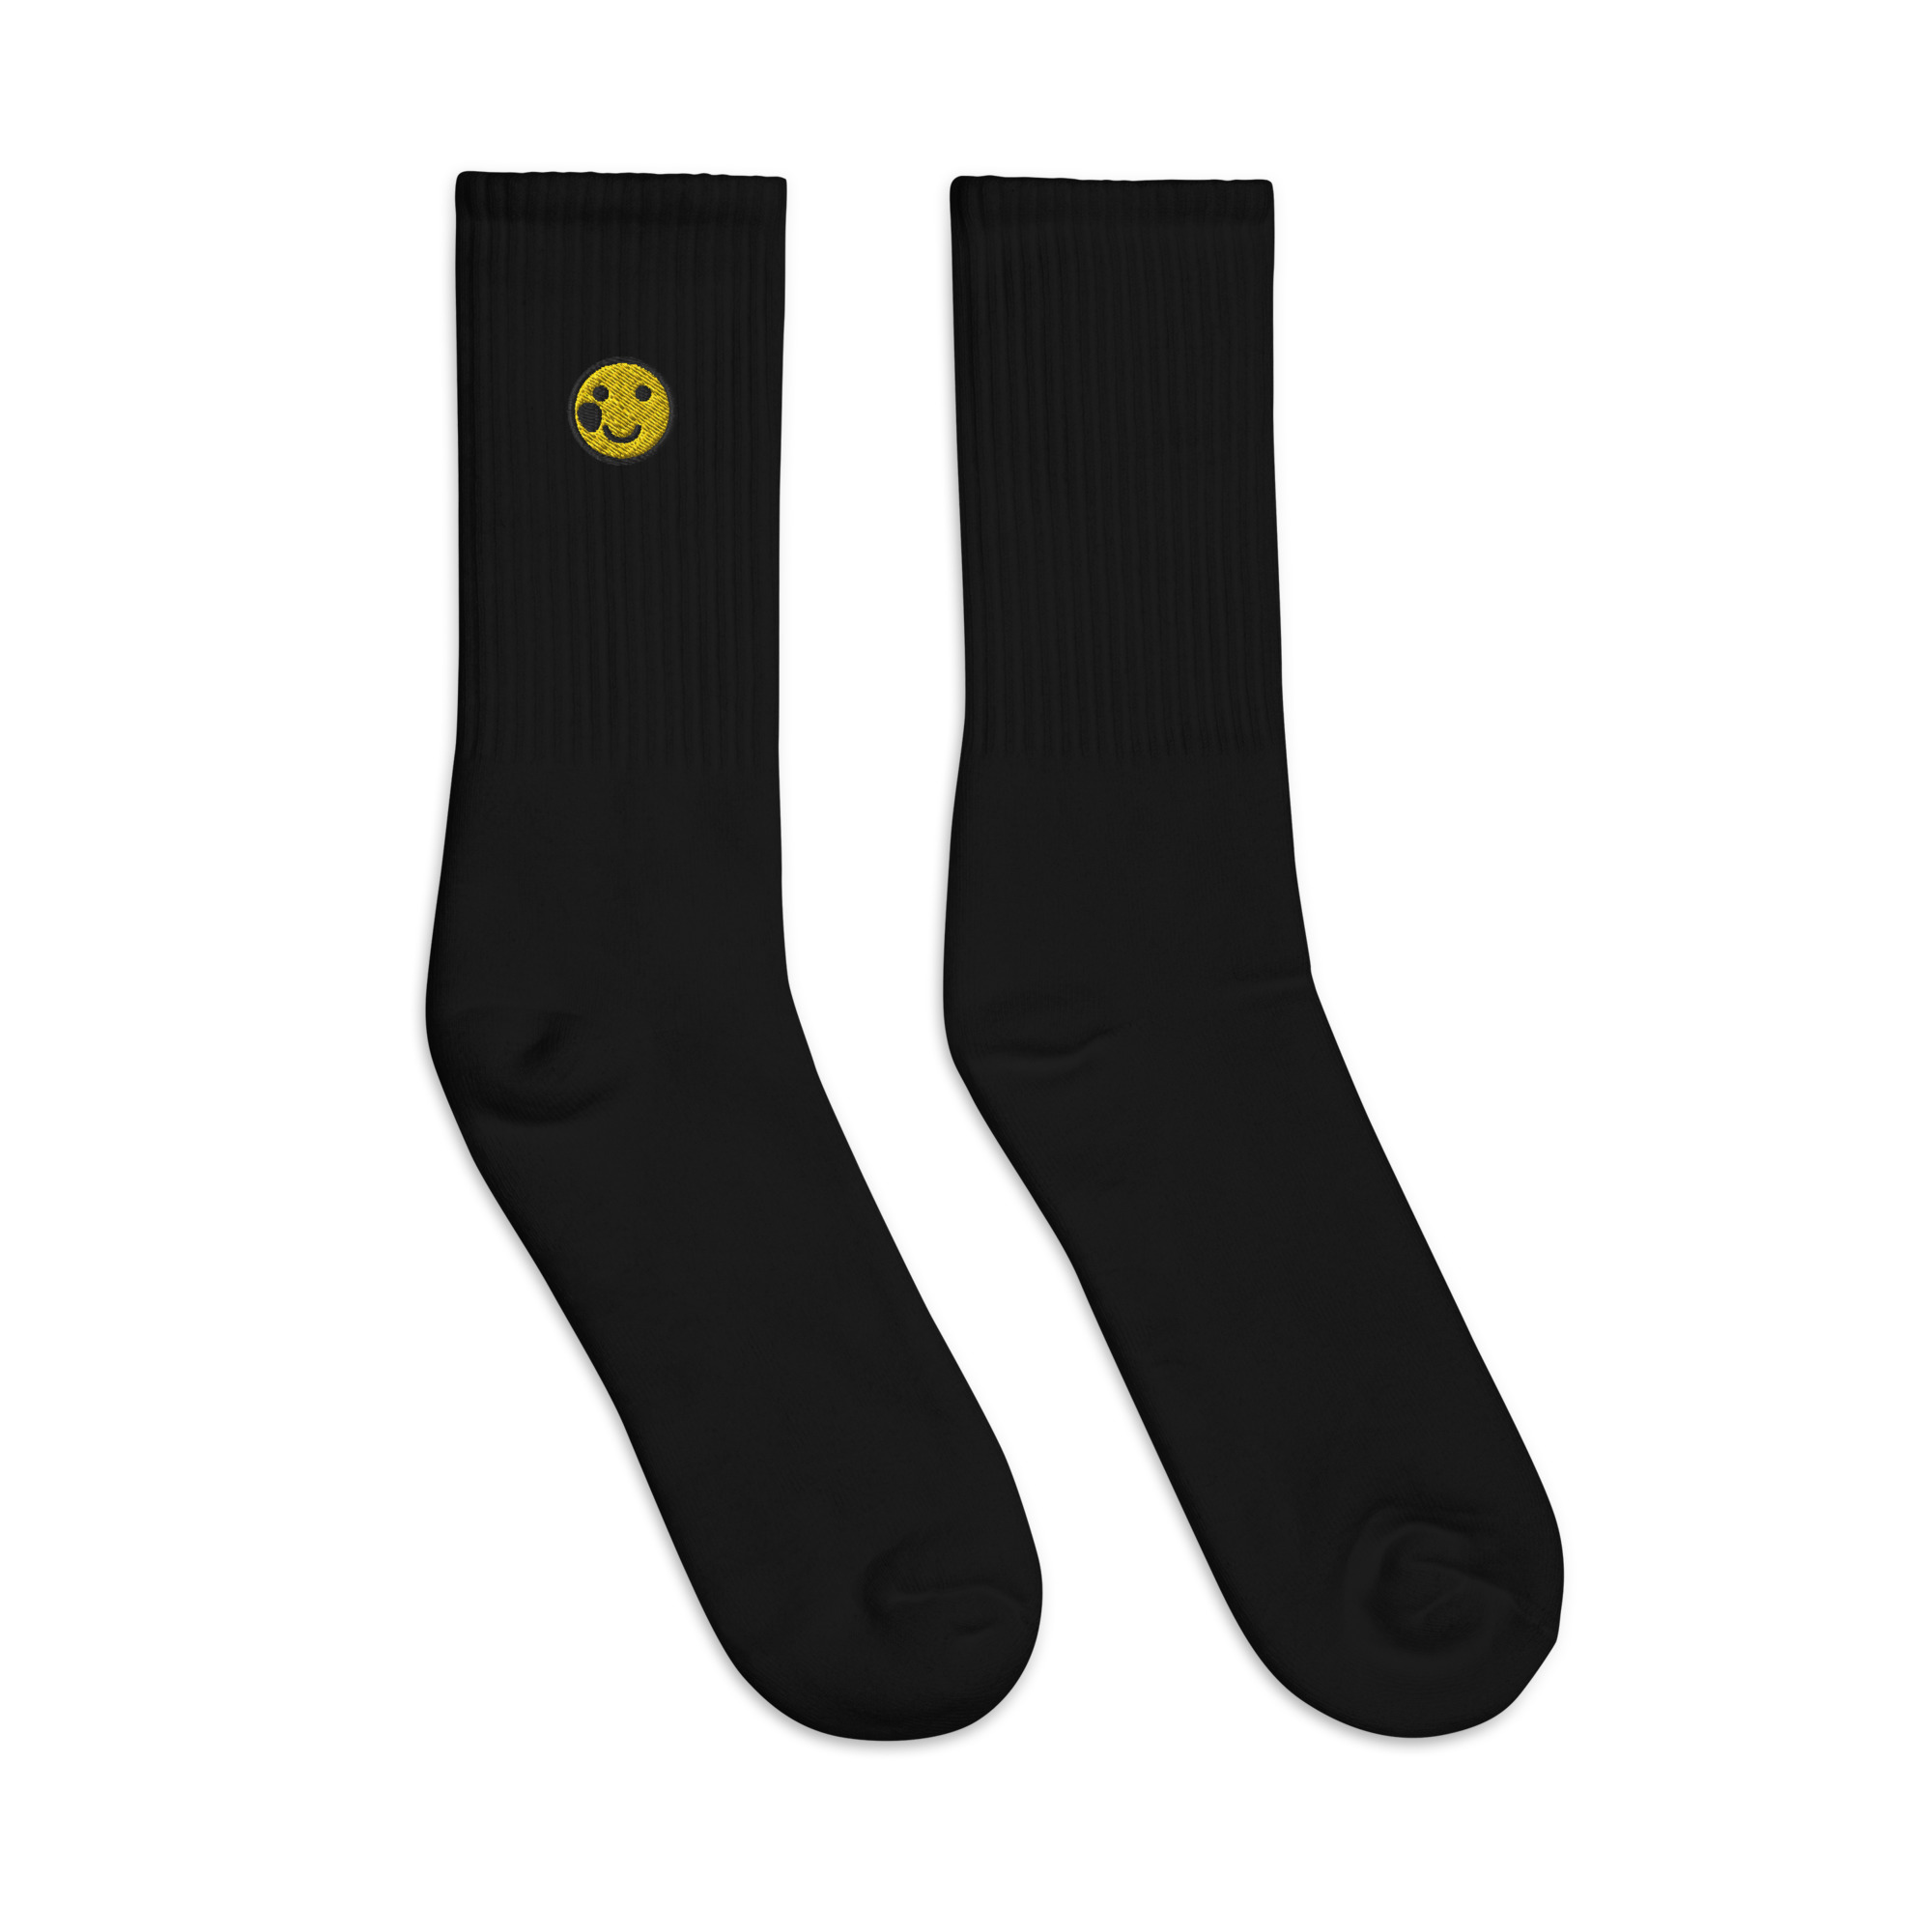 embroidered-crew-socks-black-right-6542870cf10b6.jpg